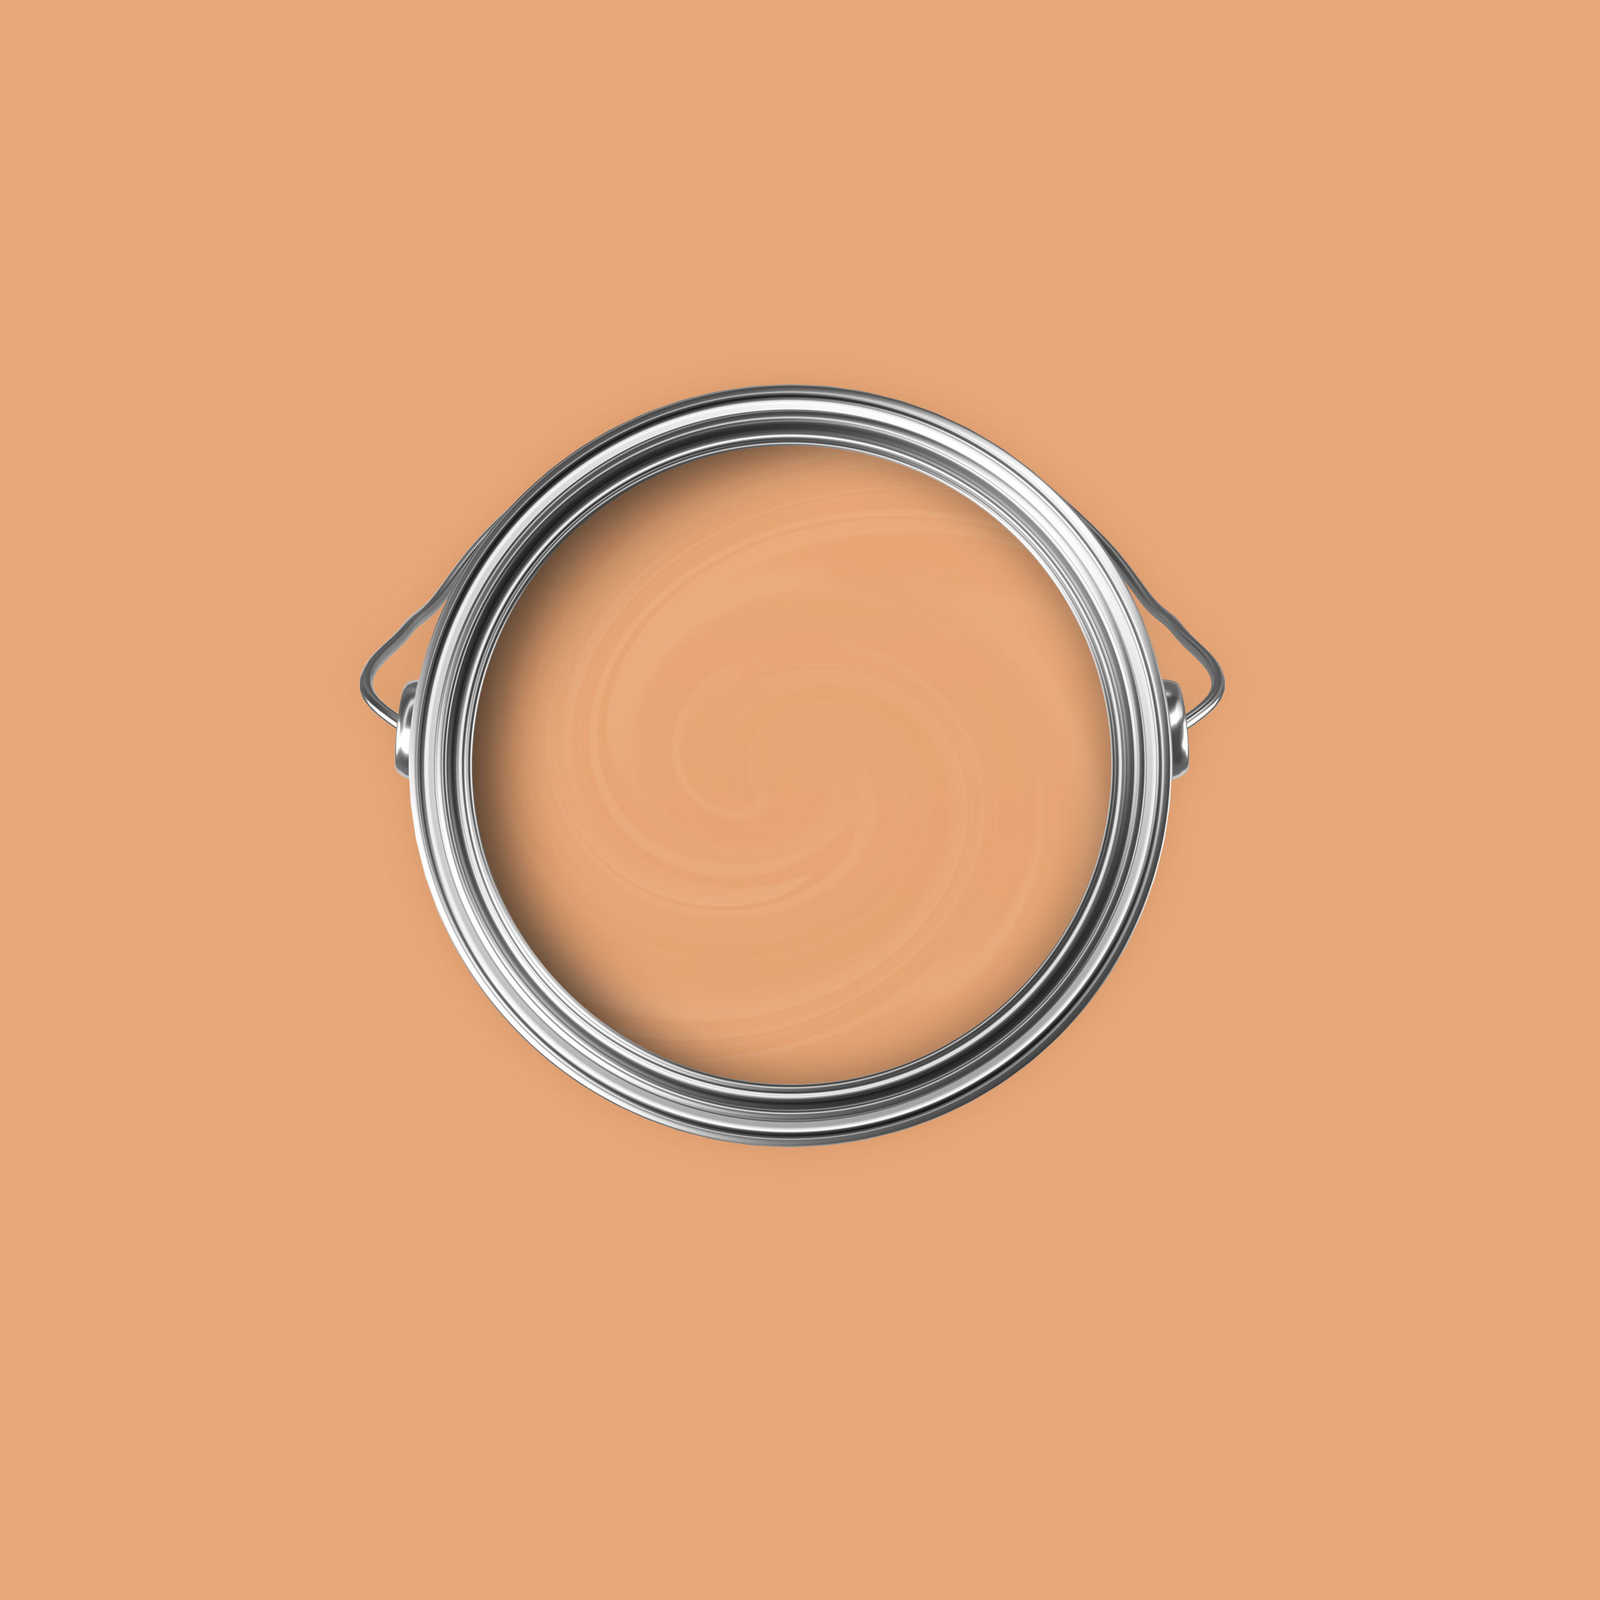             Premium Wall Paint Awakening Apricot »Pretty Peach« NW901 – 2.5 litre
        